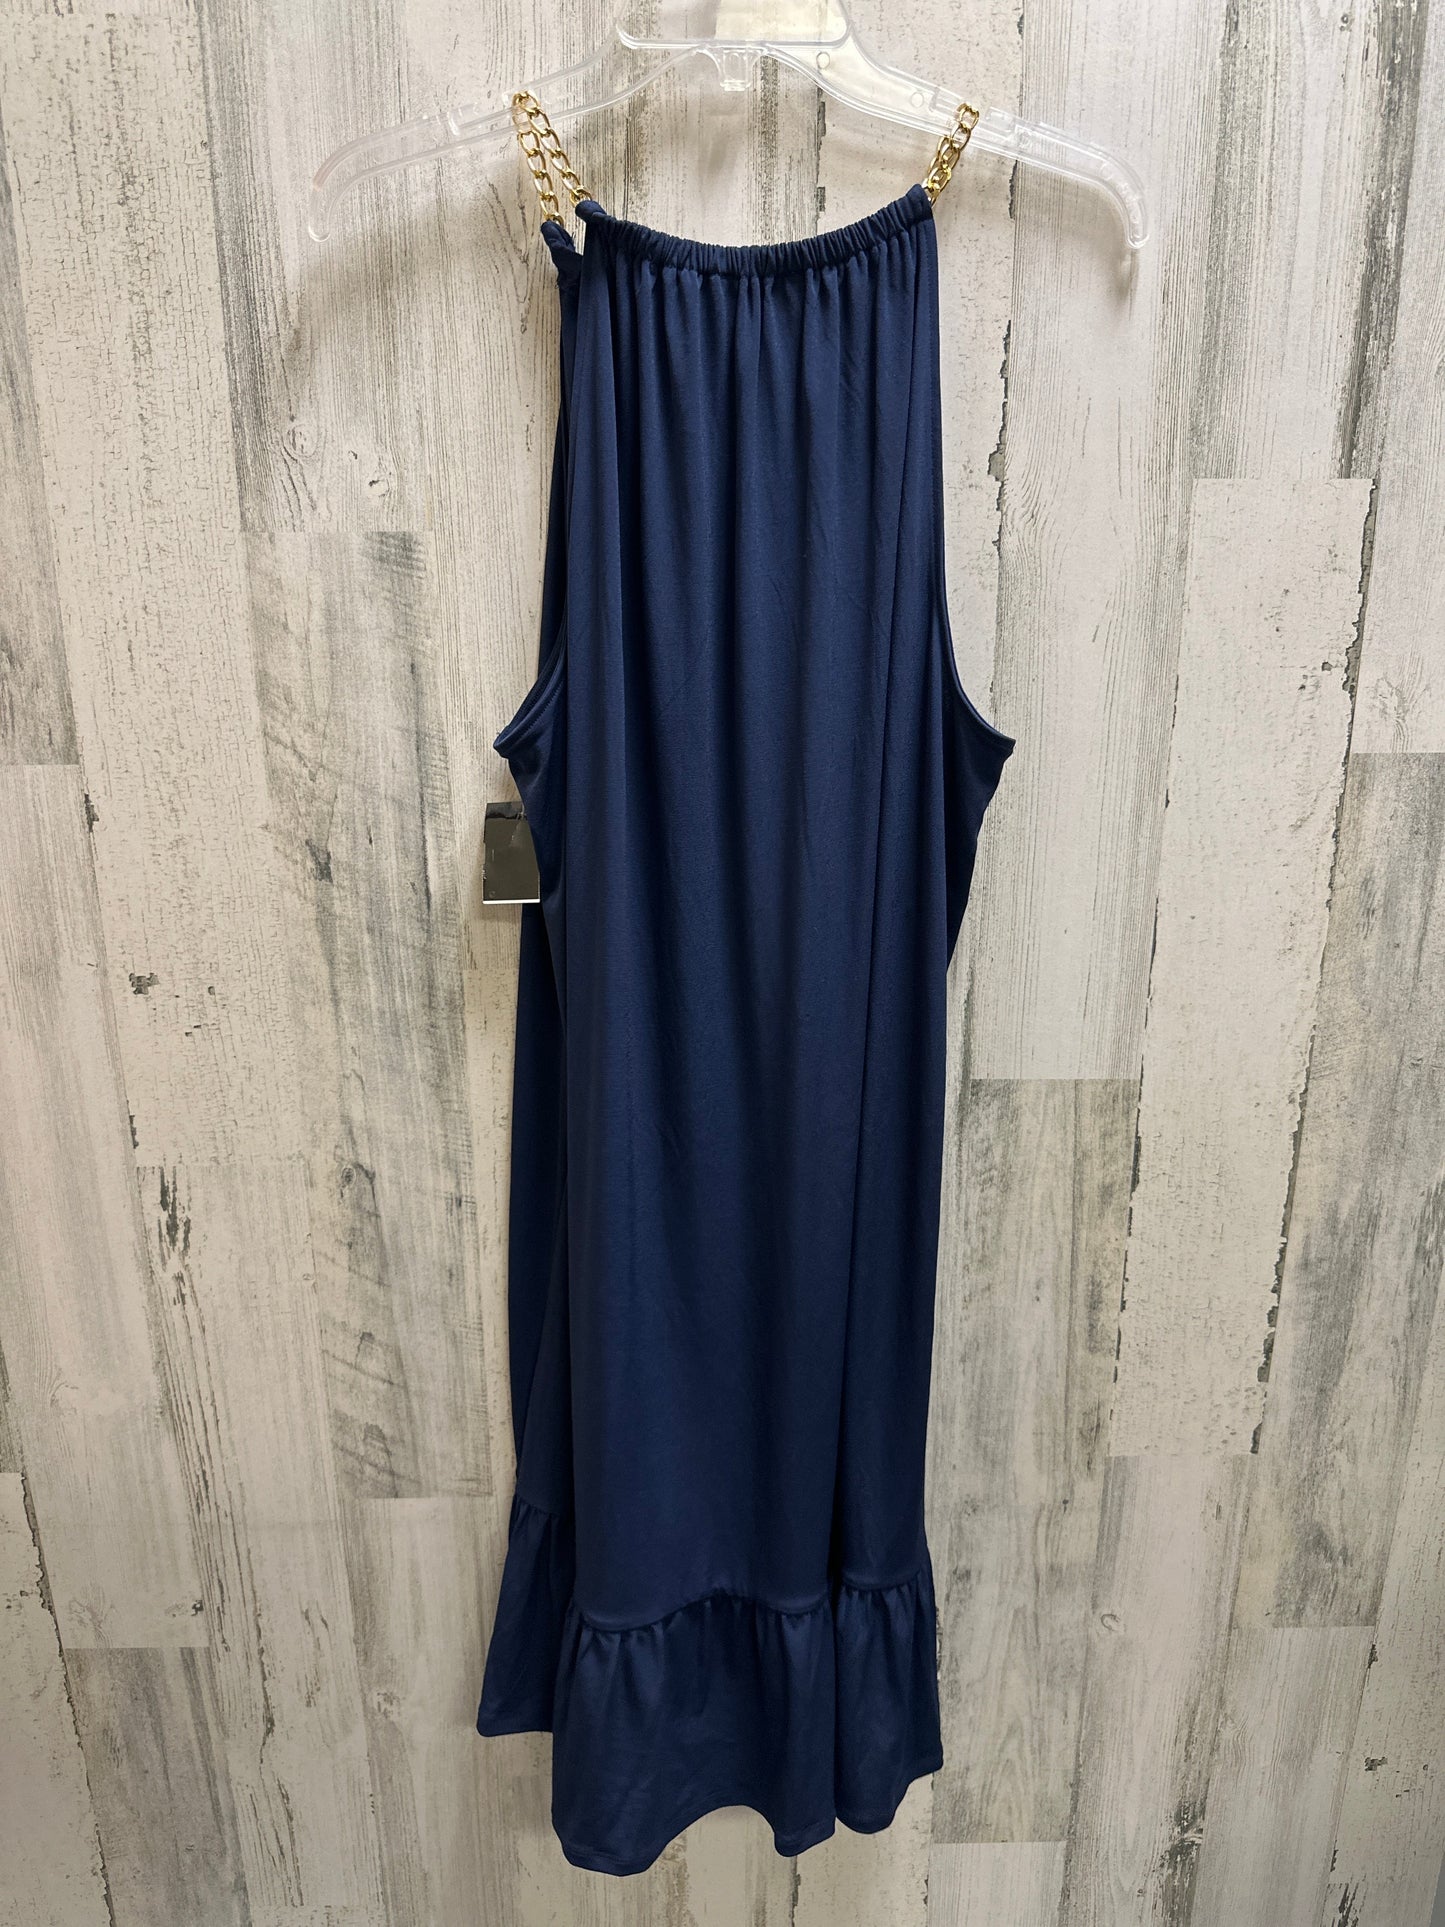 Blue Dress Casual Short Michael Kors, Size 1x